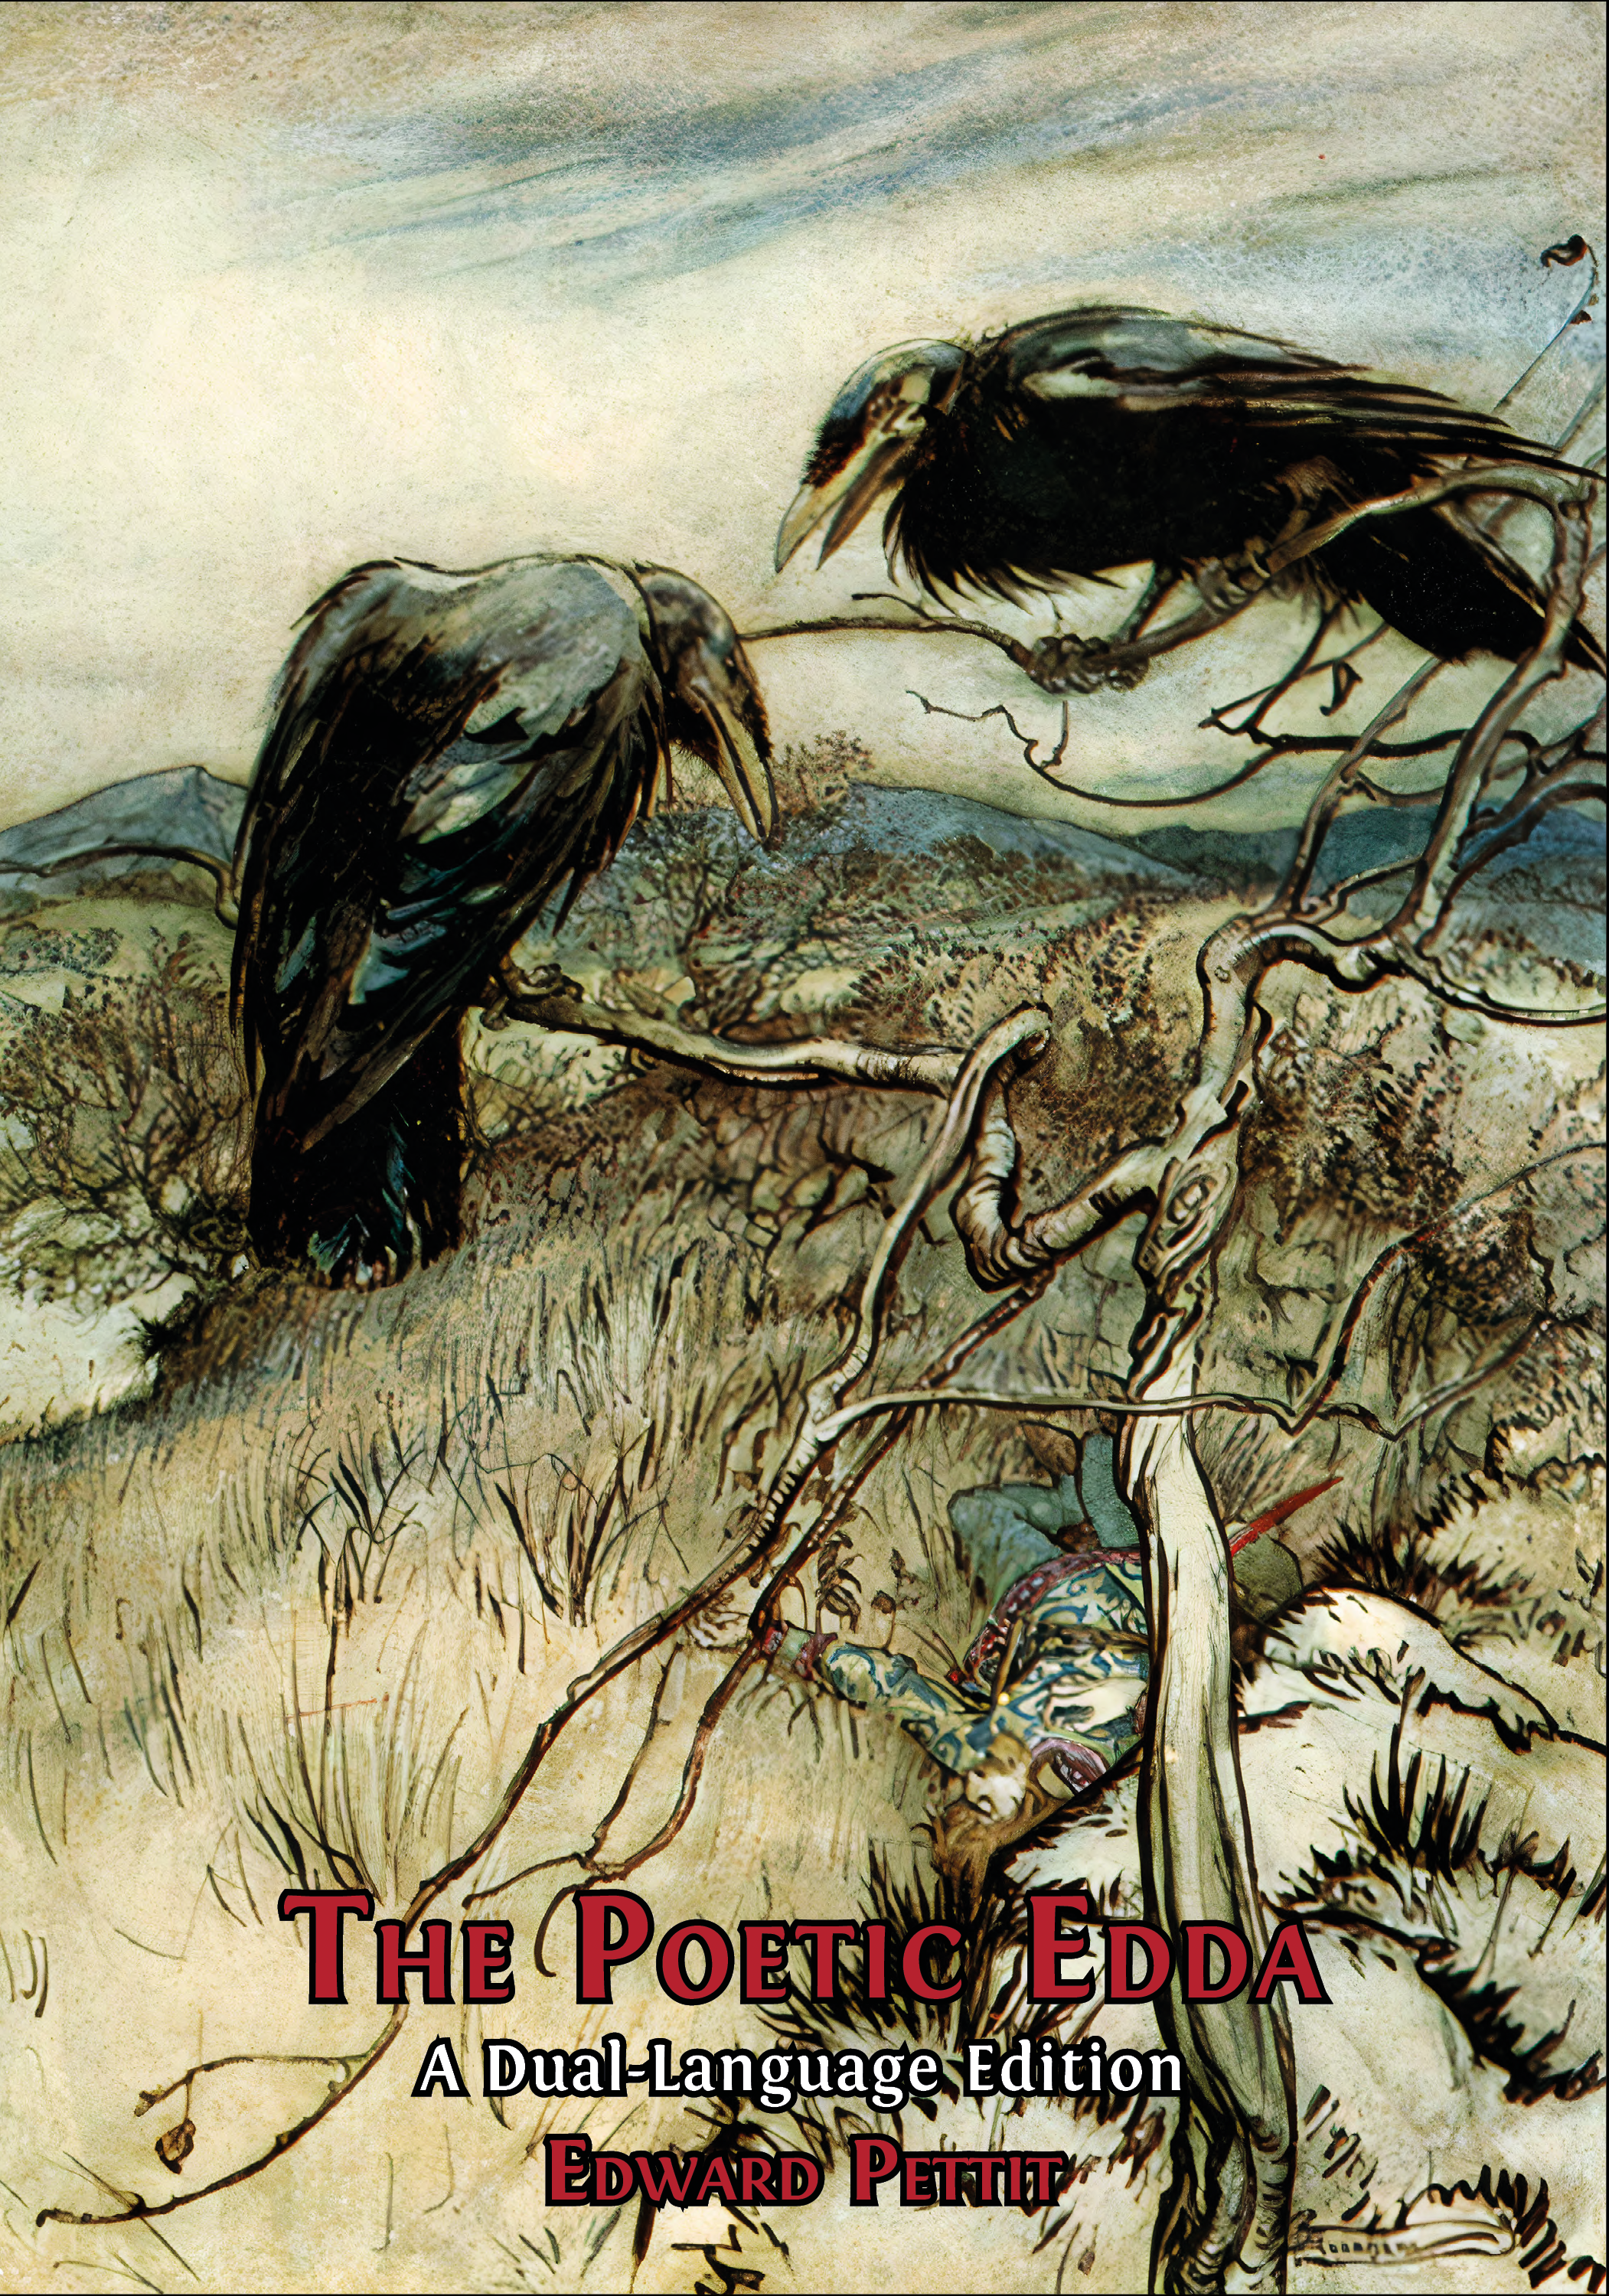 The Poetic Edda book cover image